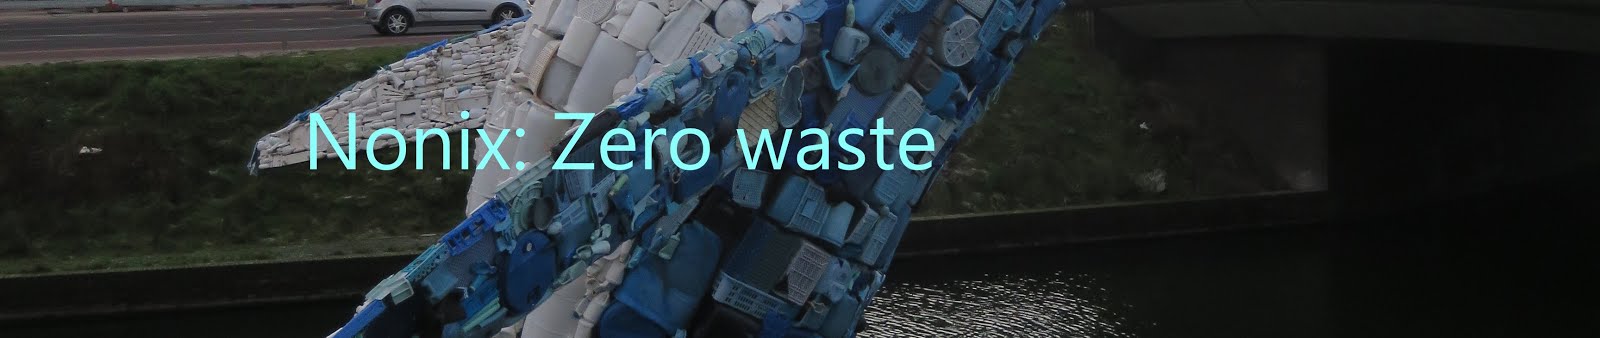 Nonix: zero waste blog